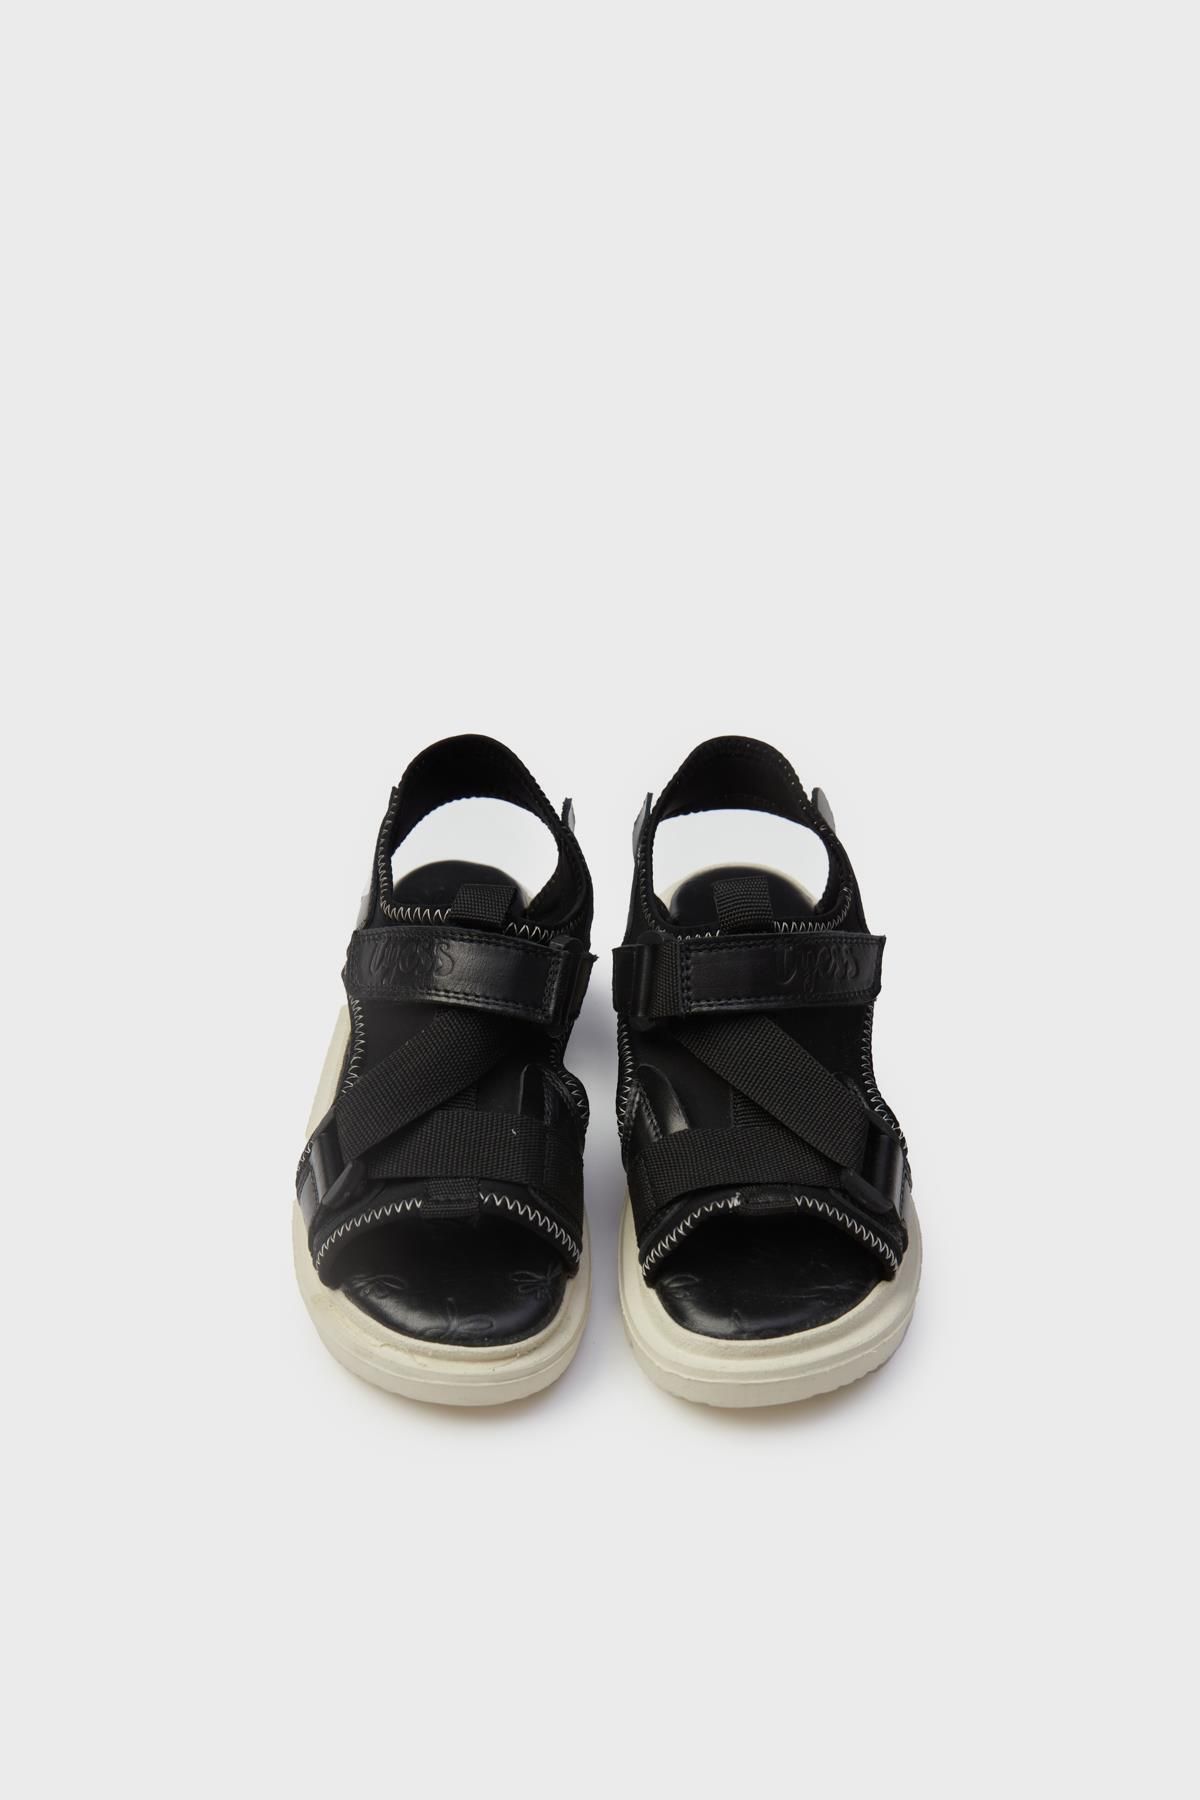 Tyess BG Store Kız Çocuk Siyah Sandalet